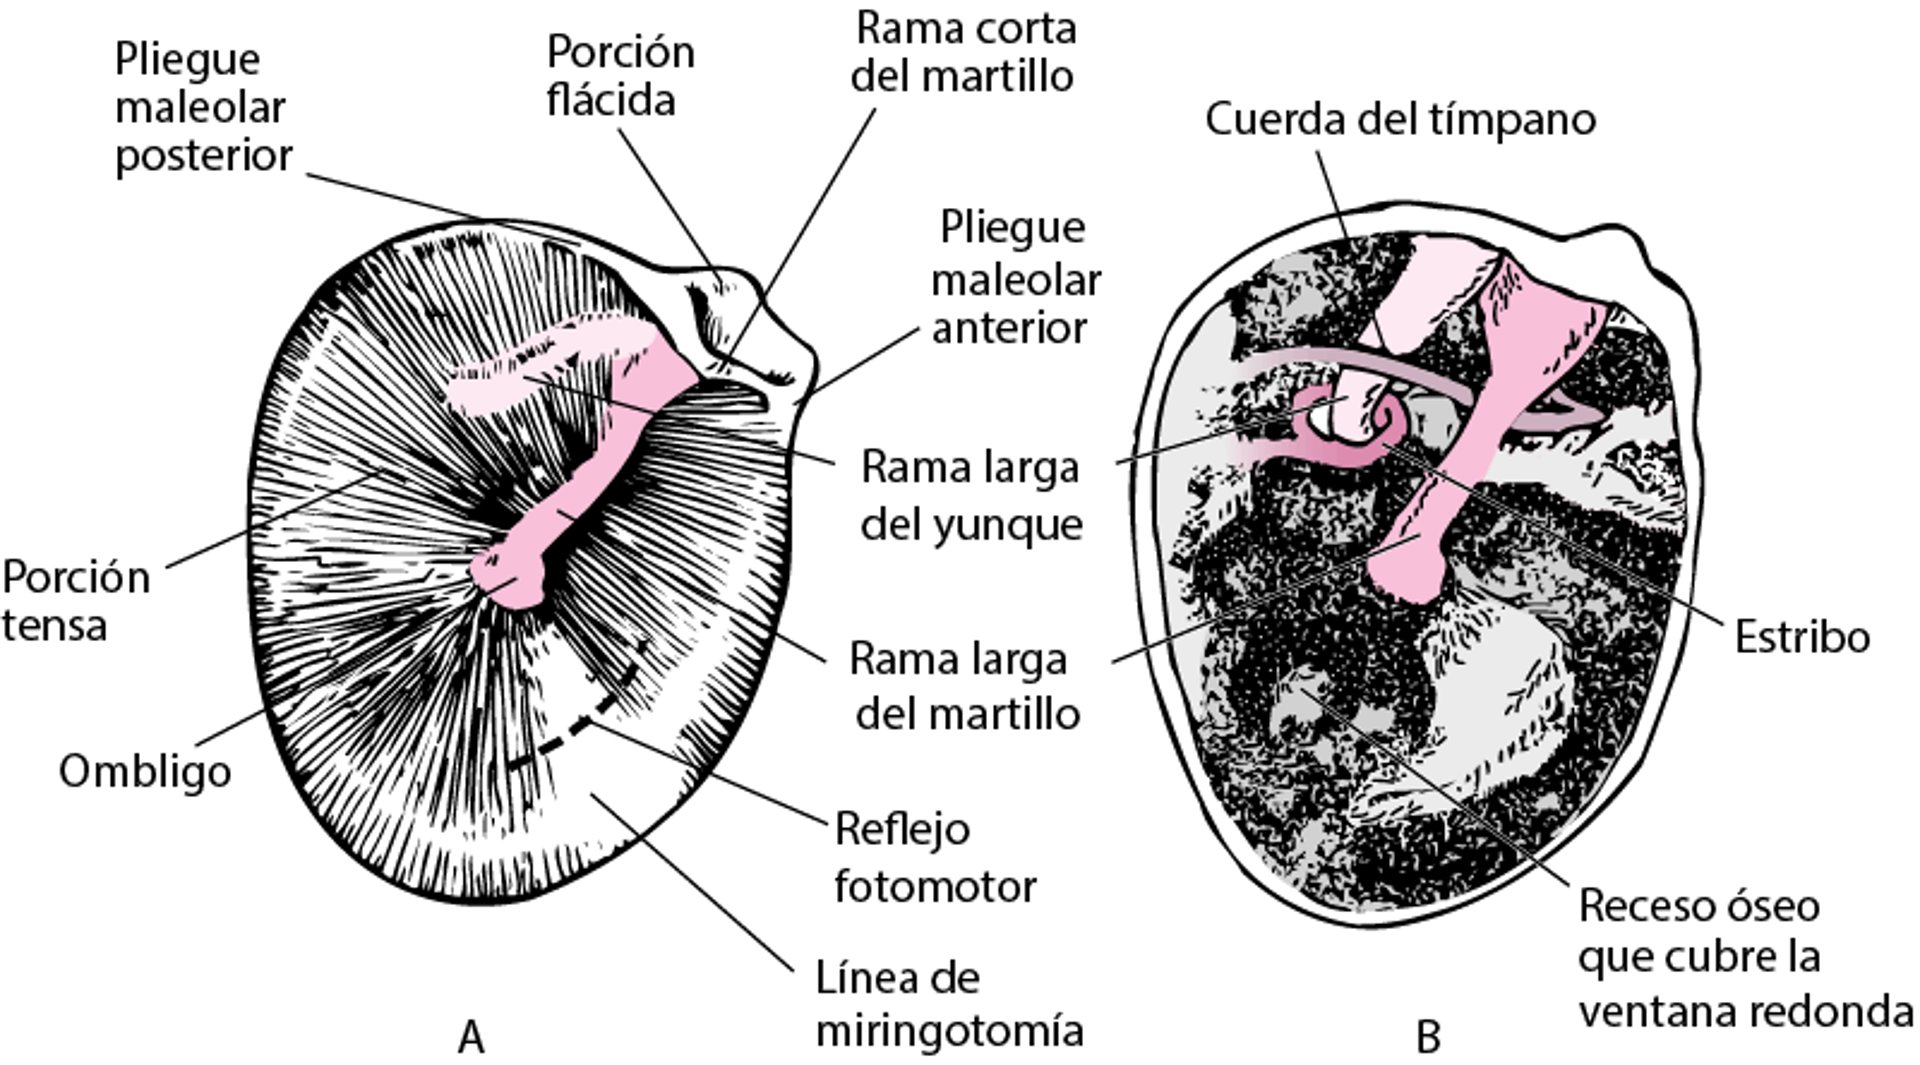 Membrana timpánica del oído derecho (A); cavidad timpánica con la membrana timpánica retirada (B)